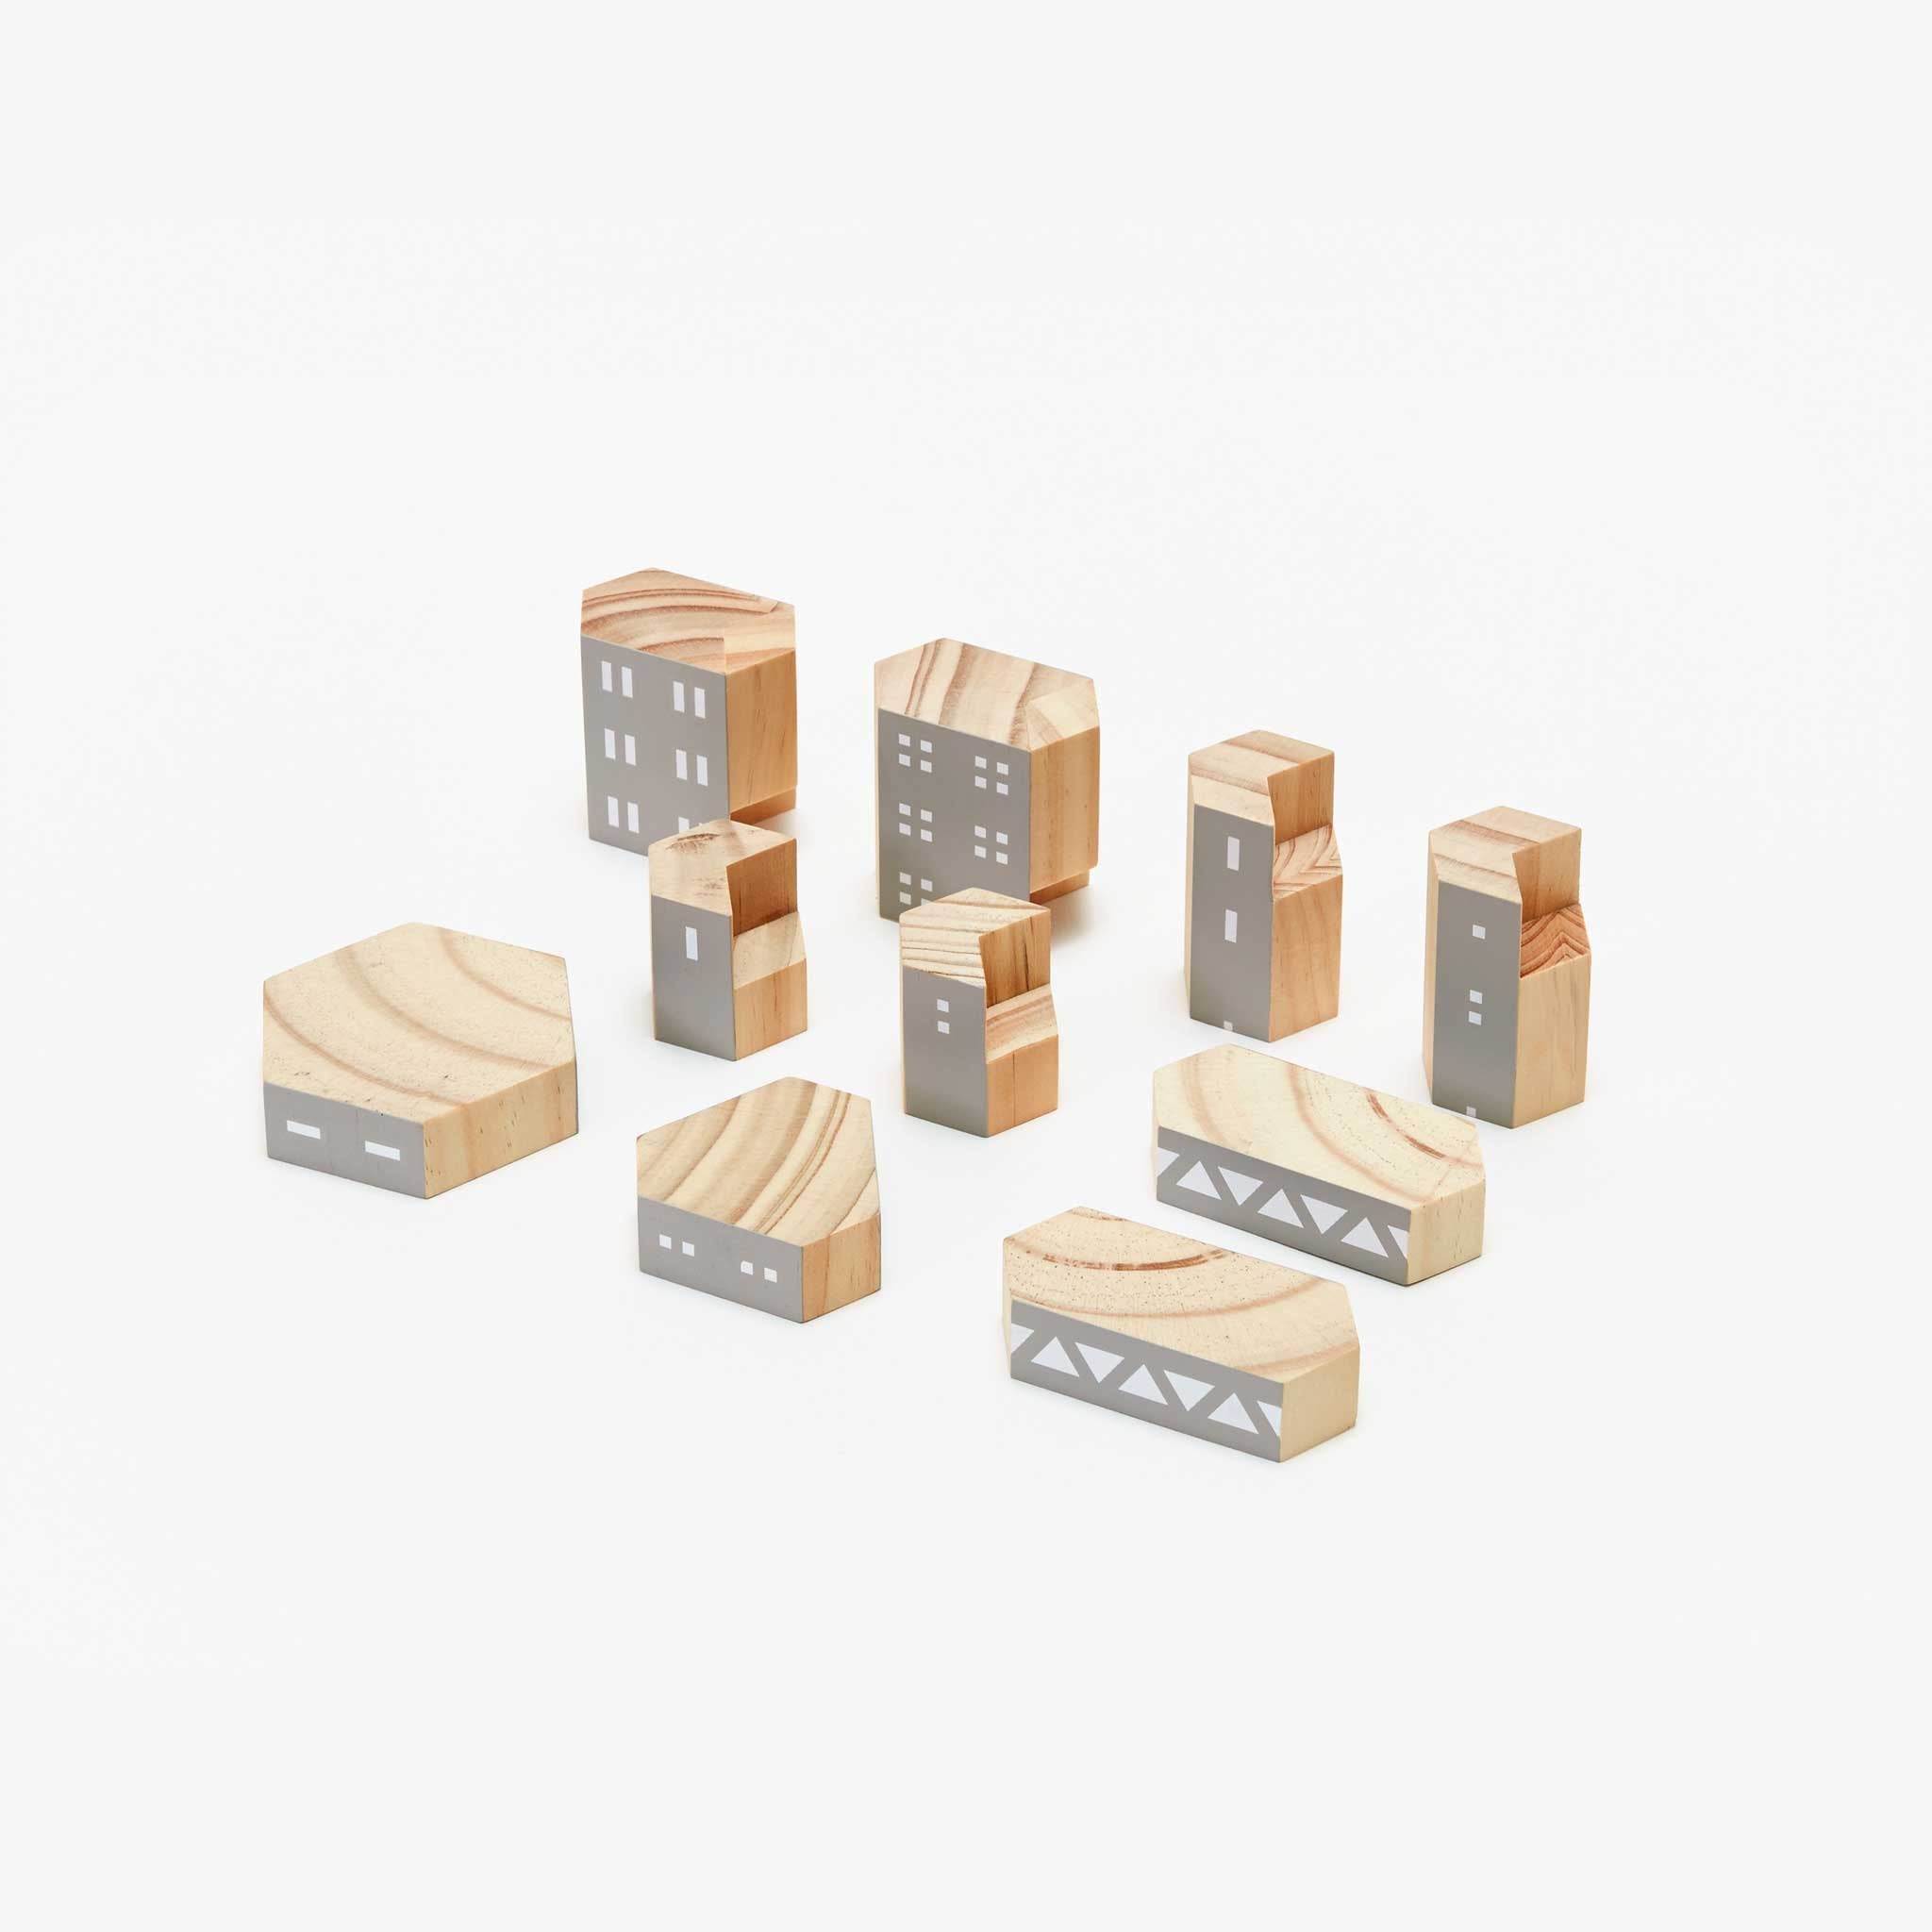 BLOCKITECTURE® | BRUTALISM | Holz Architektur BAUSTEINE | James Paulius | Areaware